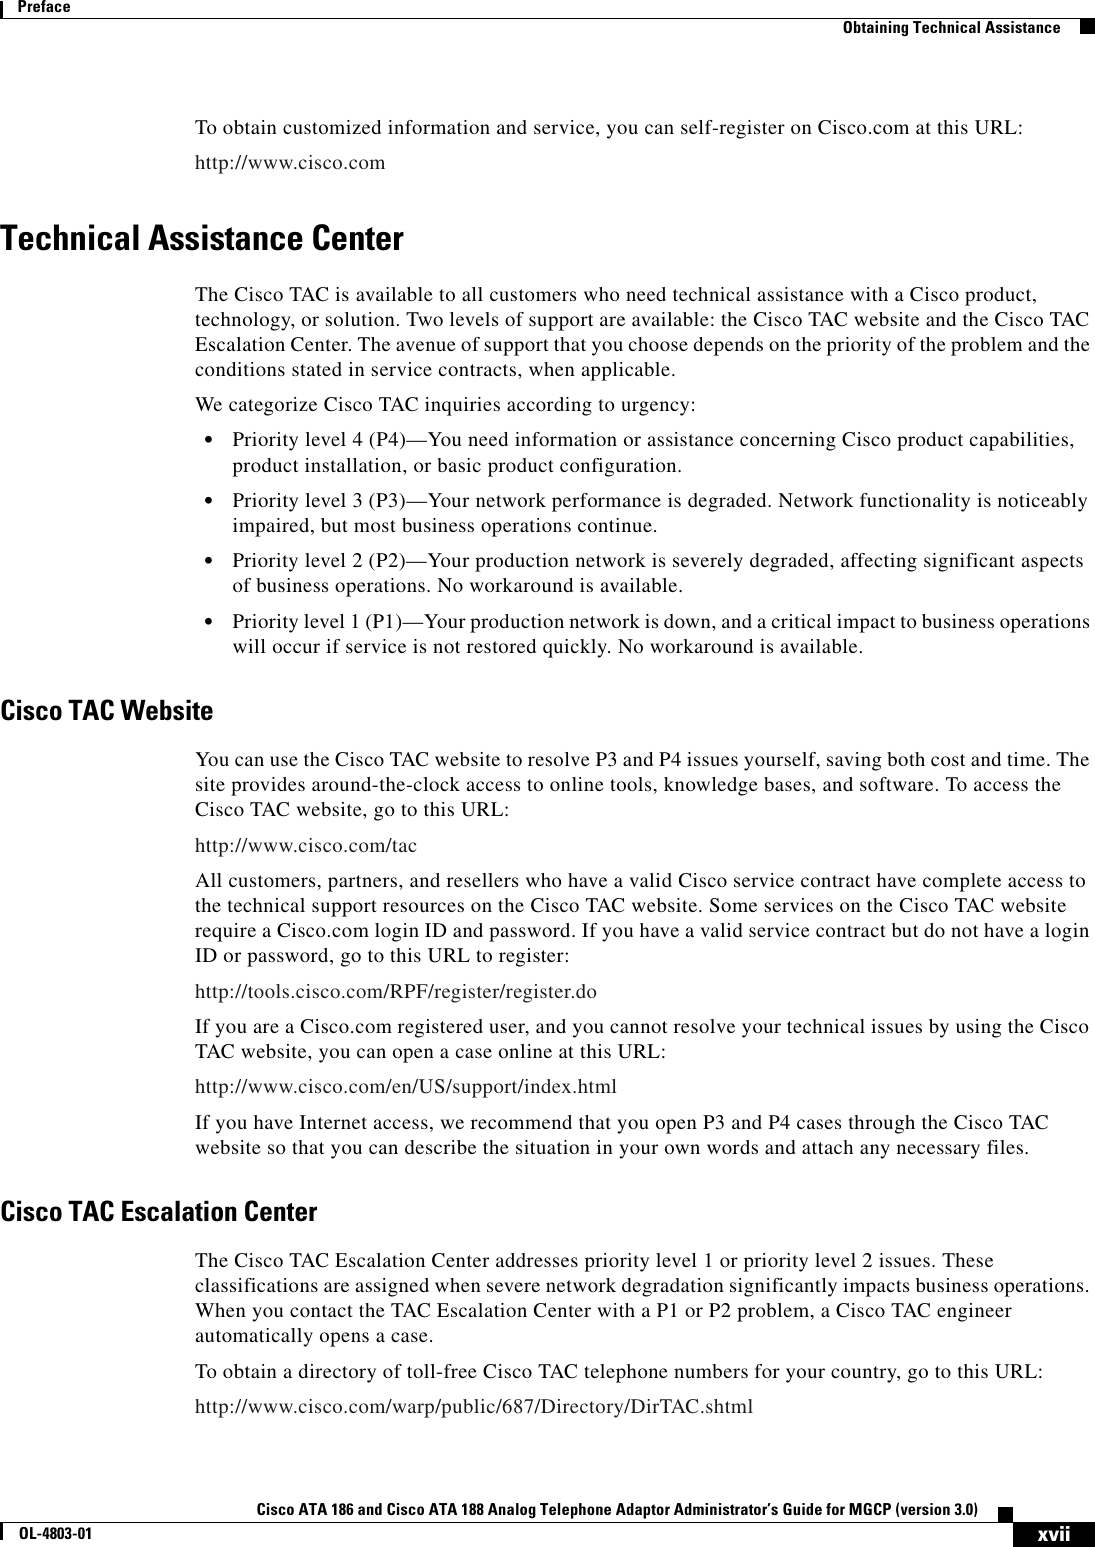 Cisco Systems Ata 186 Users Manual And 188 Analog Telephone